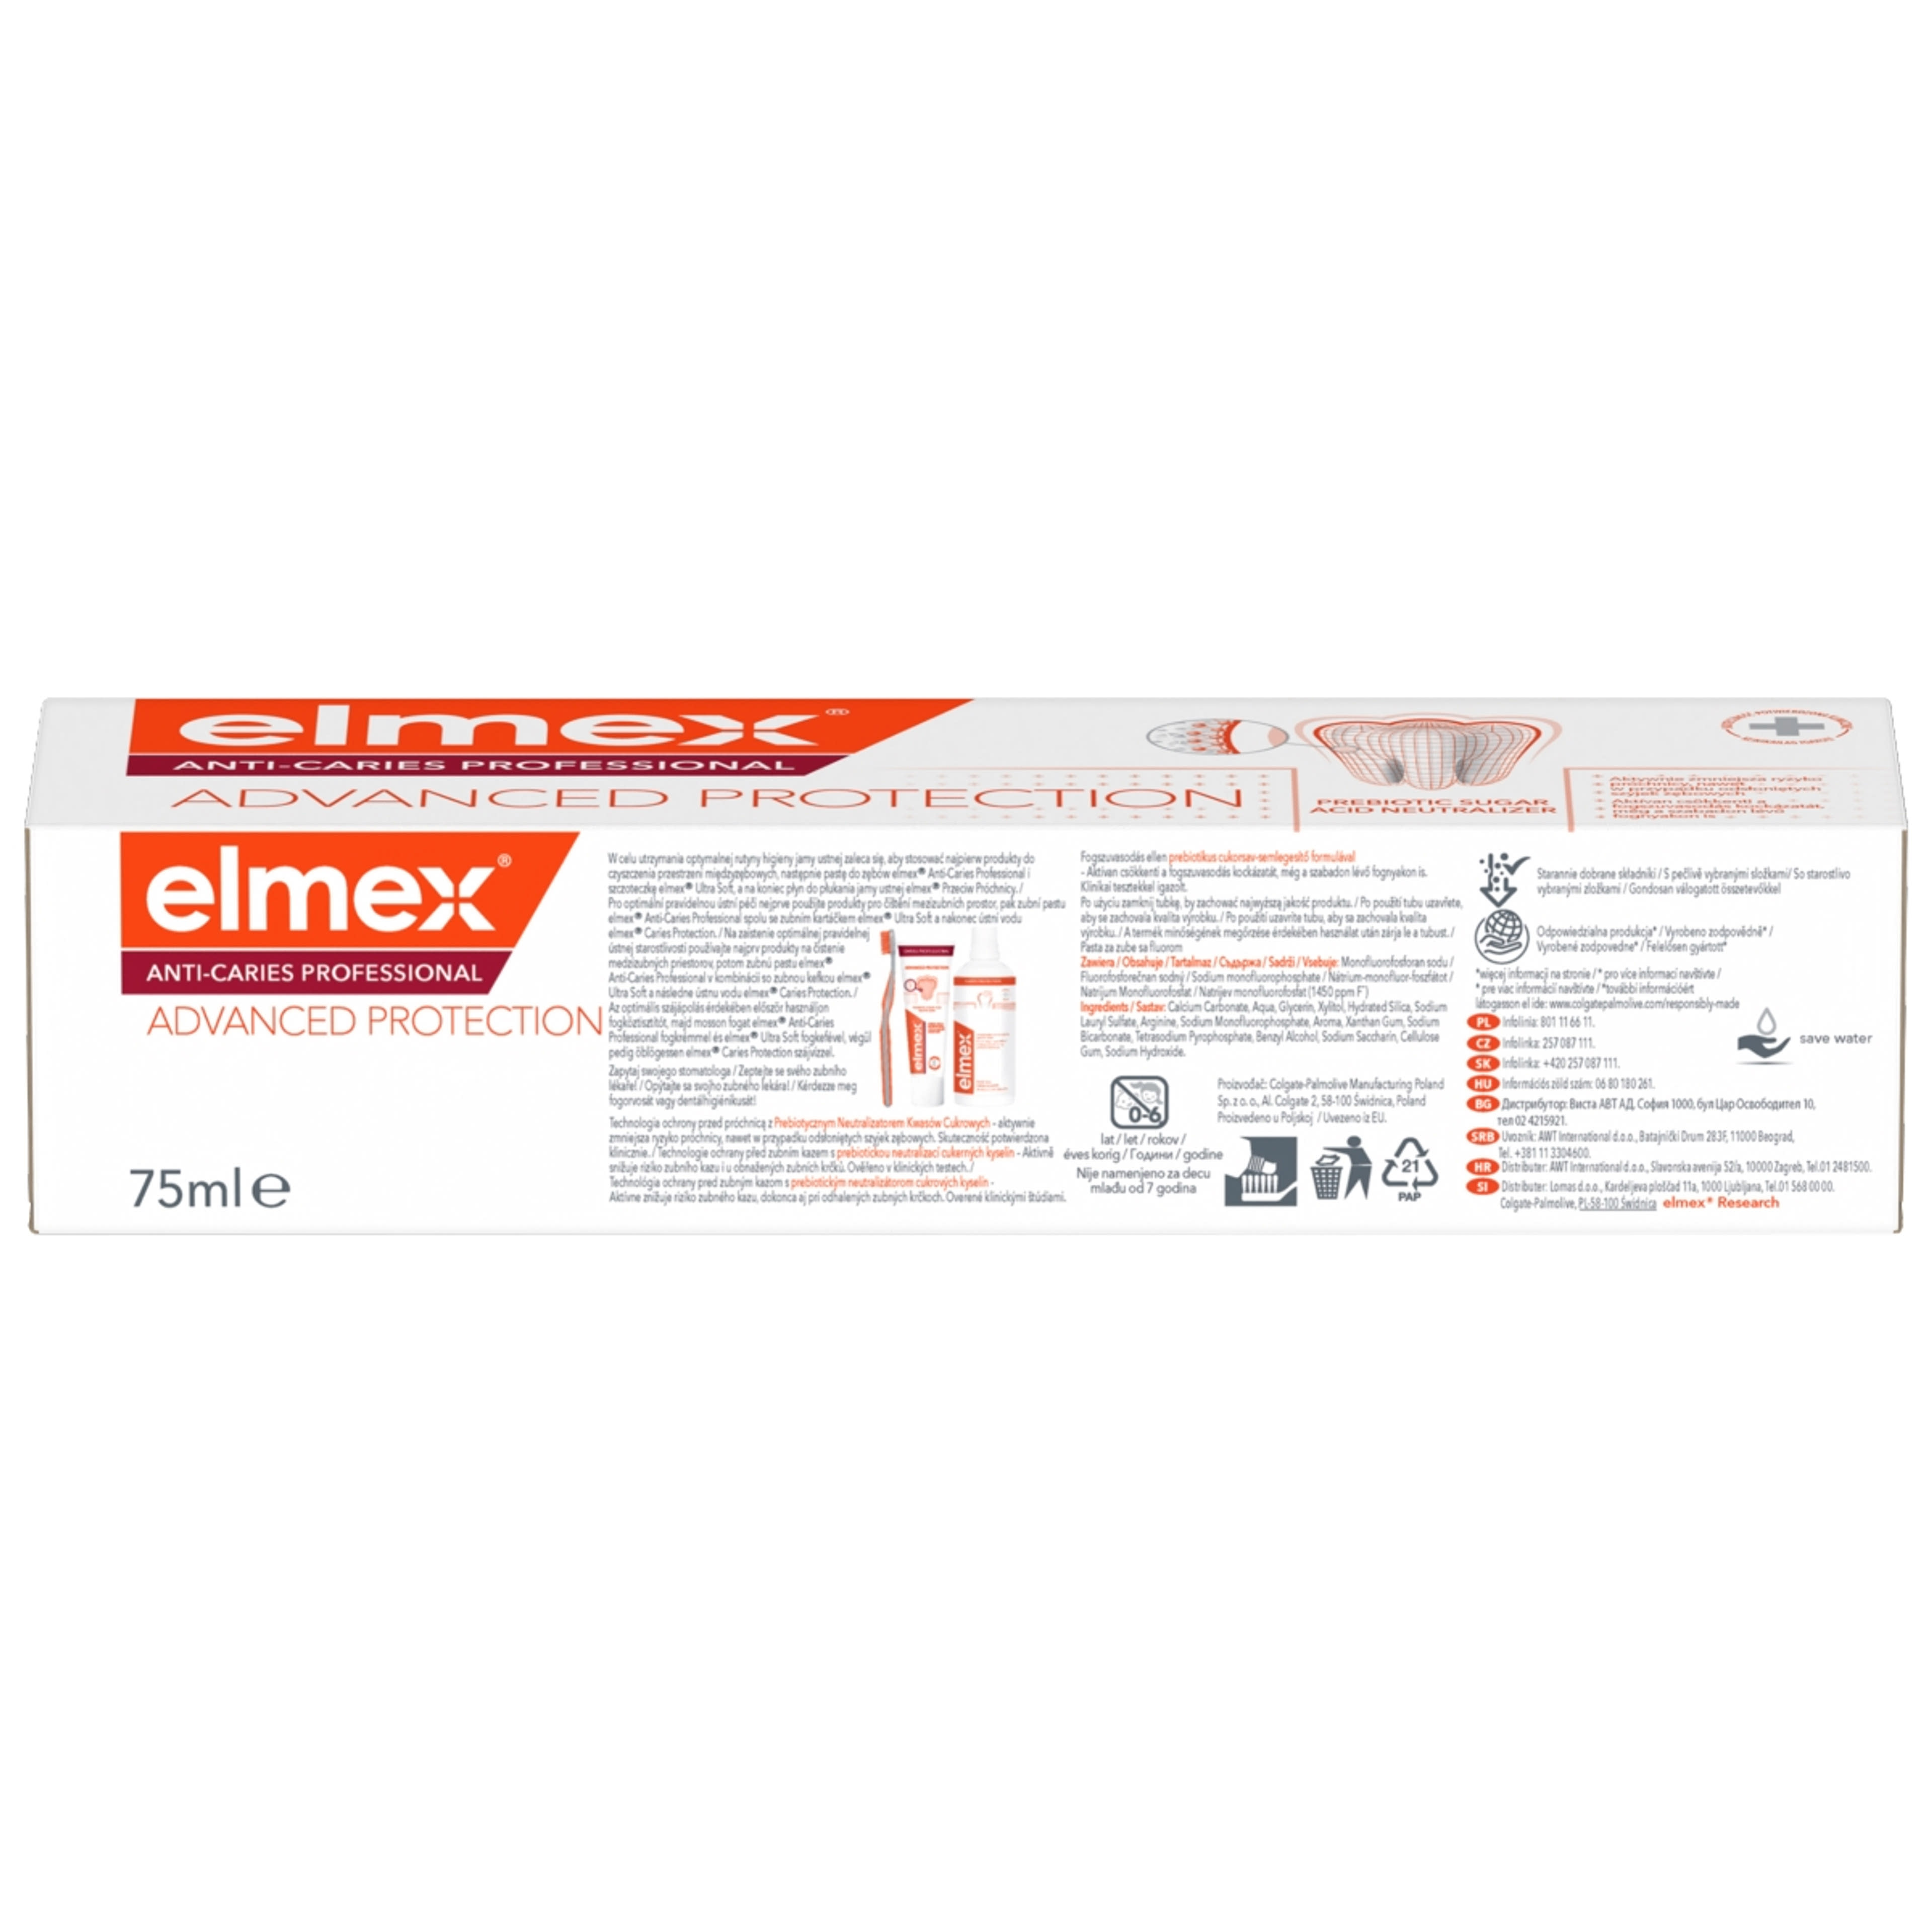 Elmex Anti-Caries Protection Professional fogkrém fogkrém - 75 ml-3